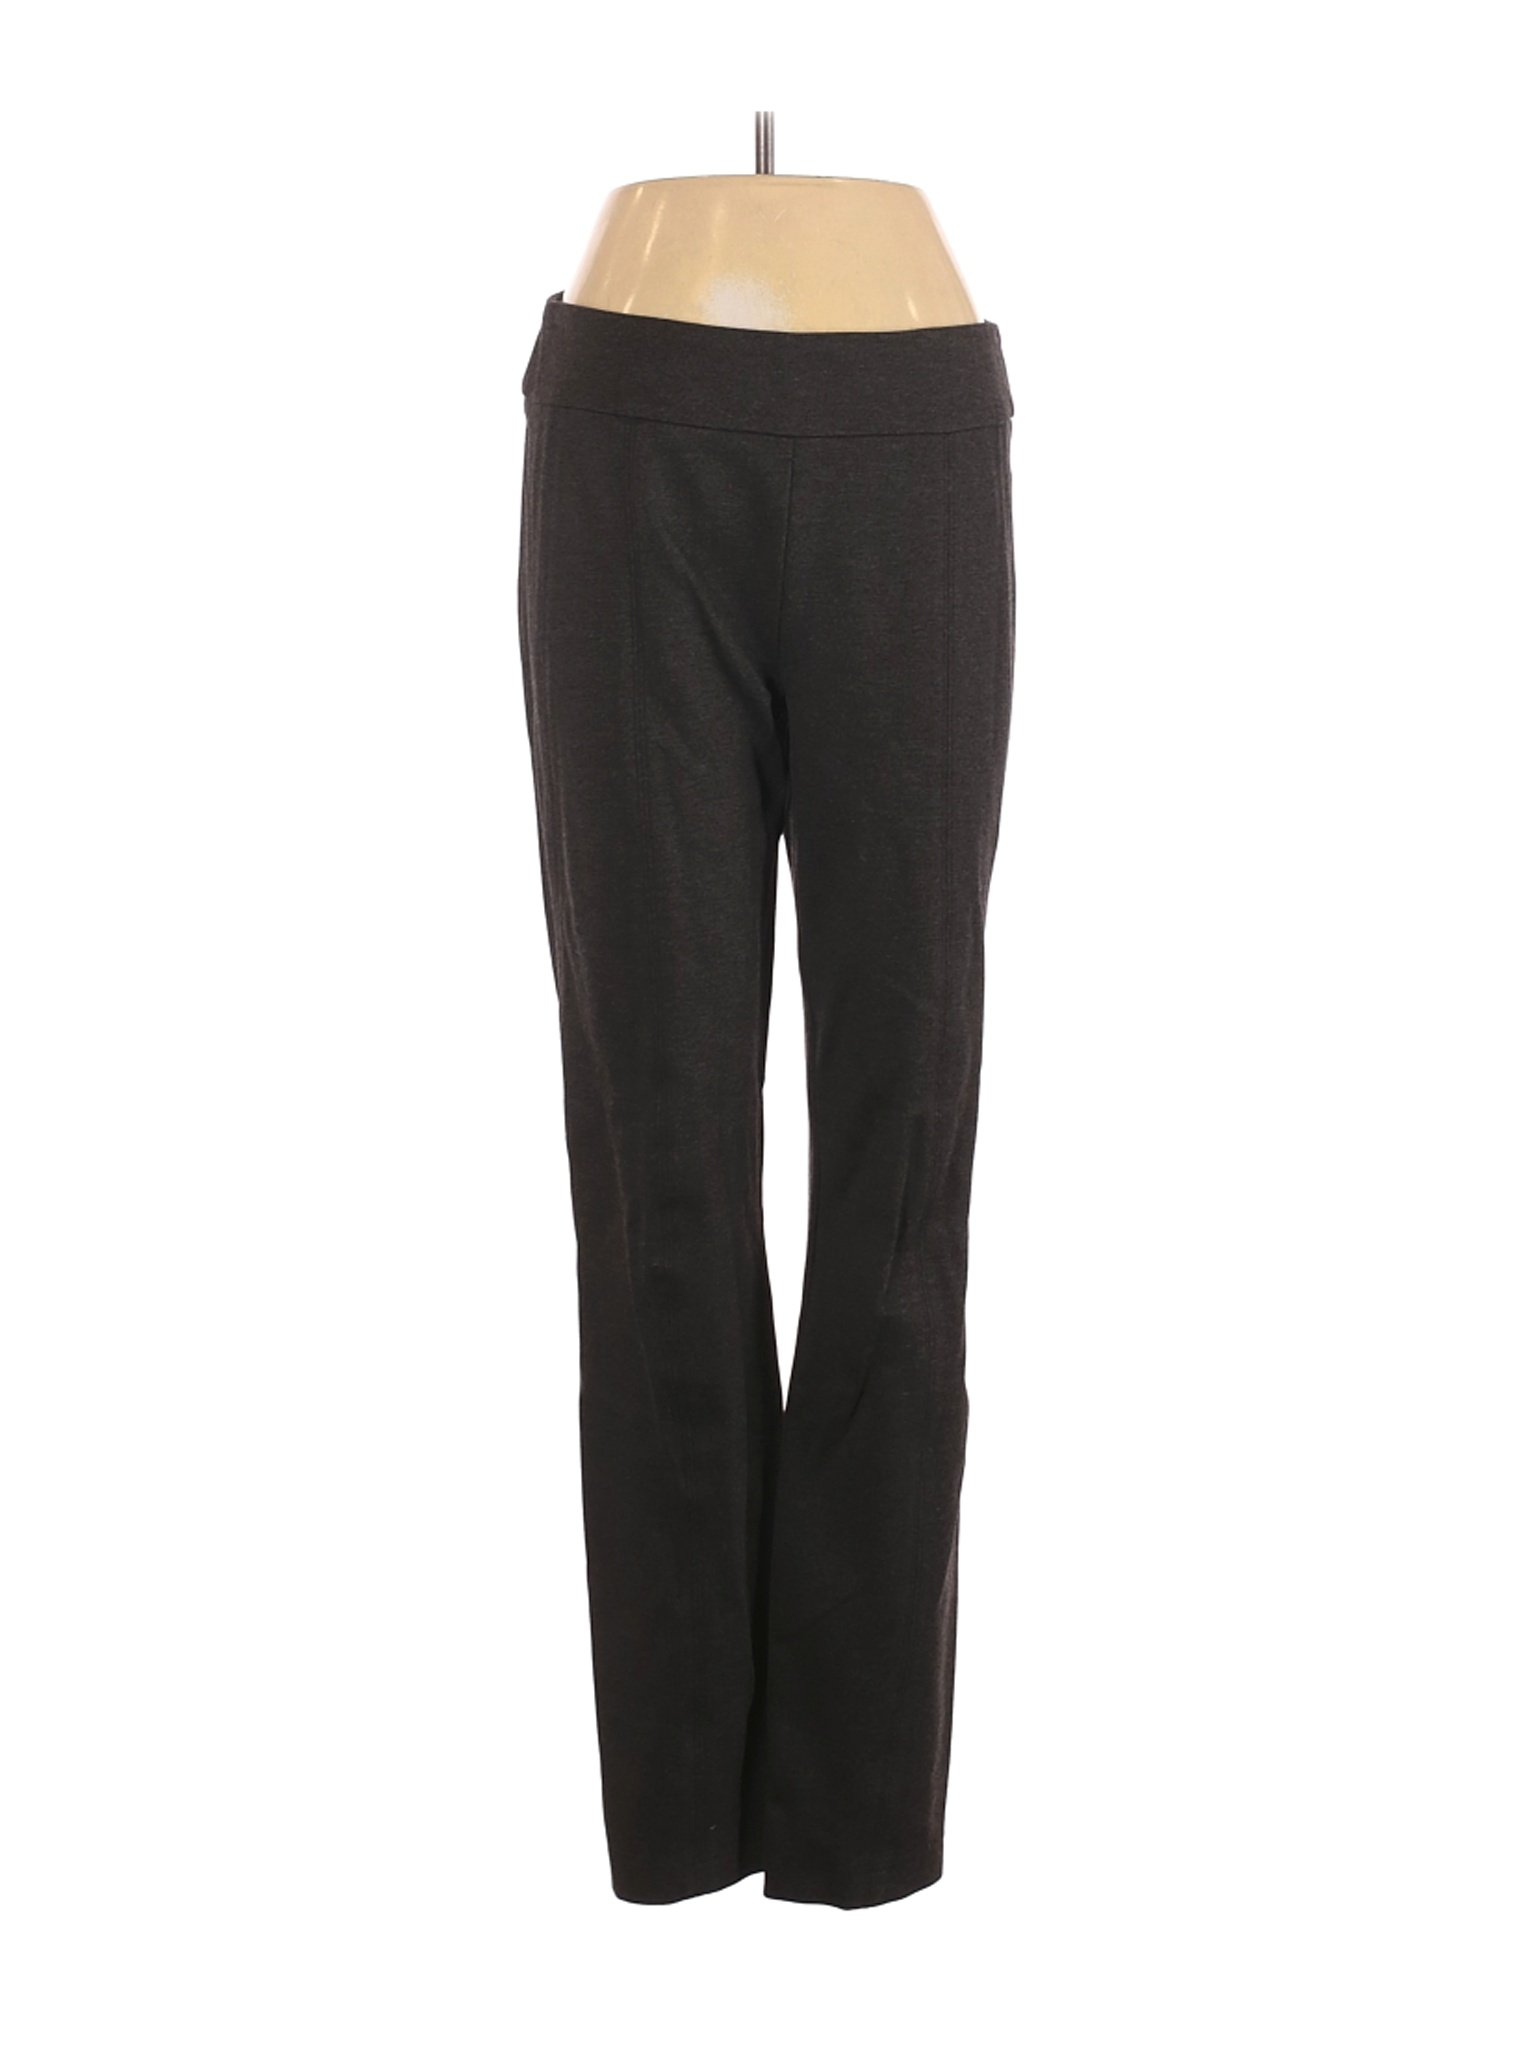 Renuar Women Black Casual Pants 4 | eBay